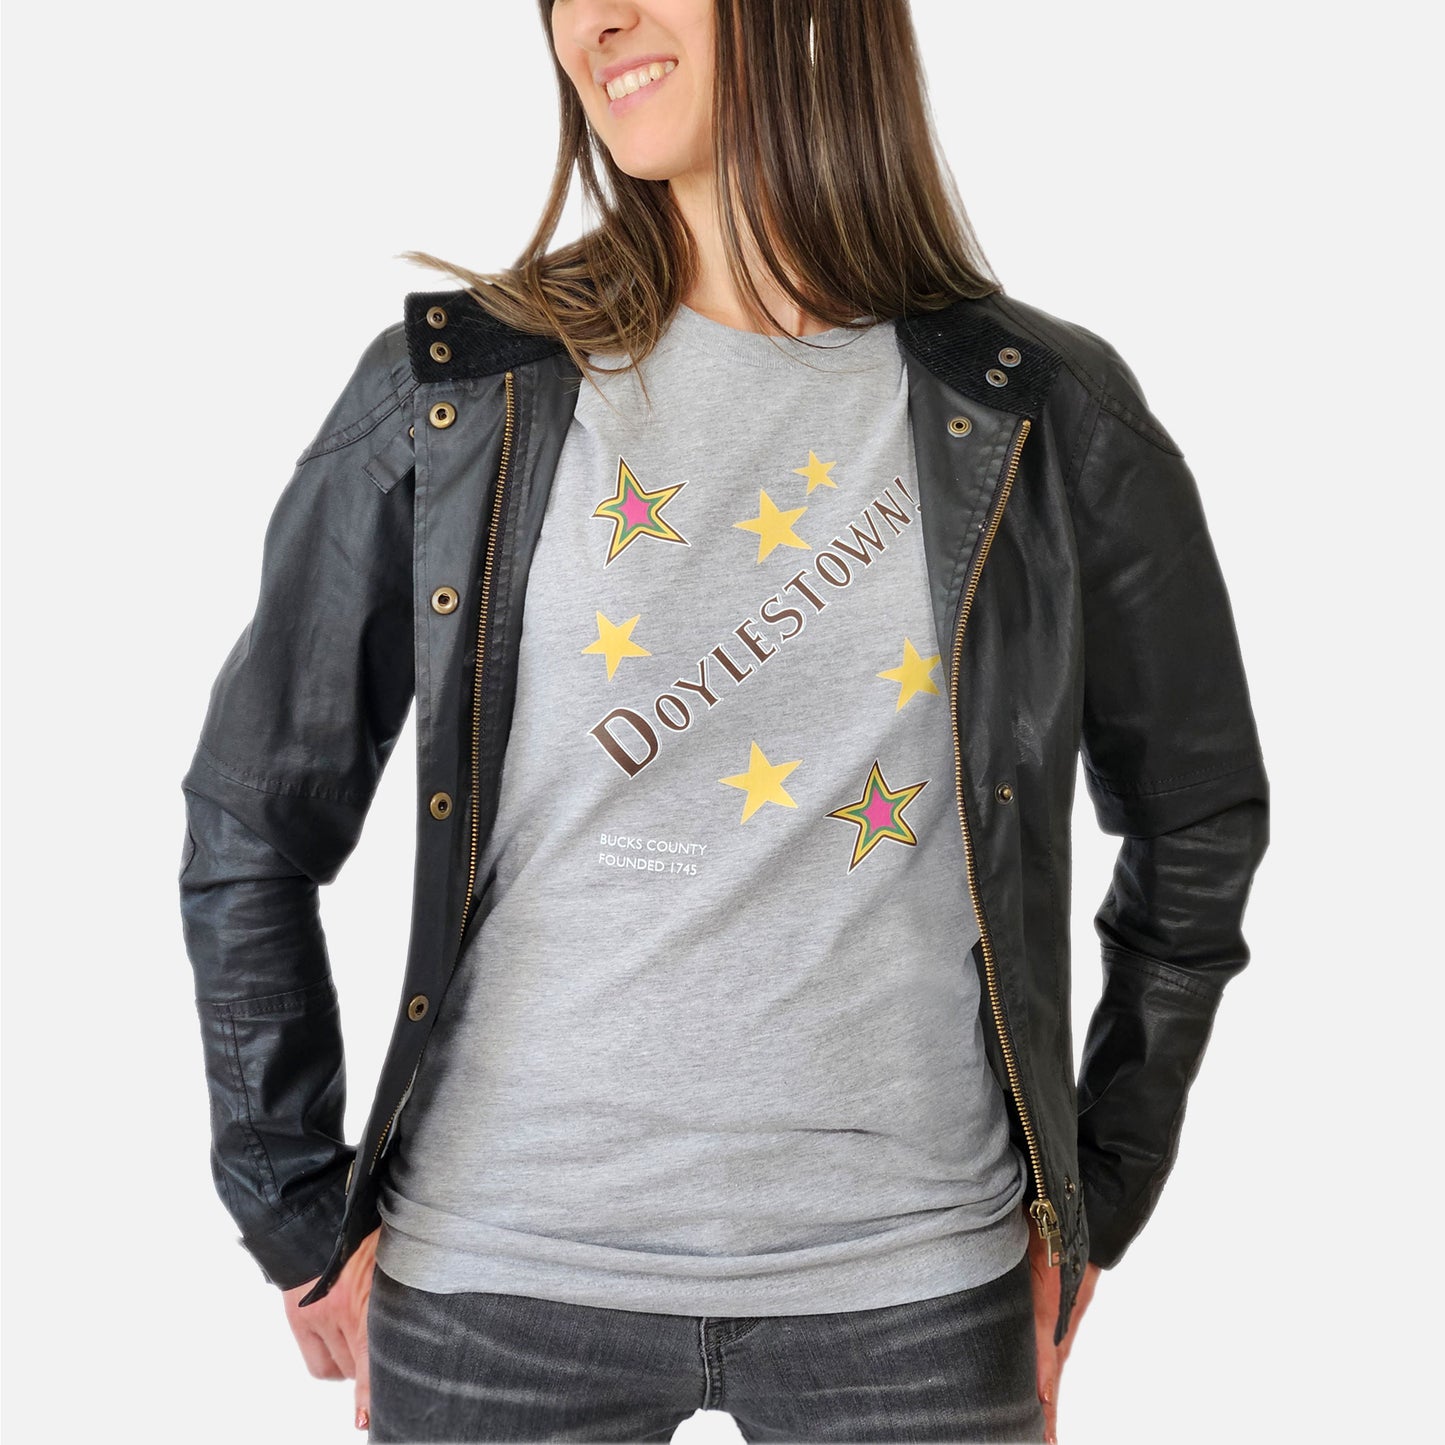 Doylestown Stars graphic T-shirt - heather grey